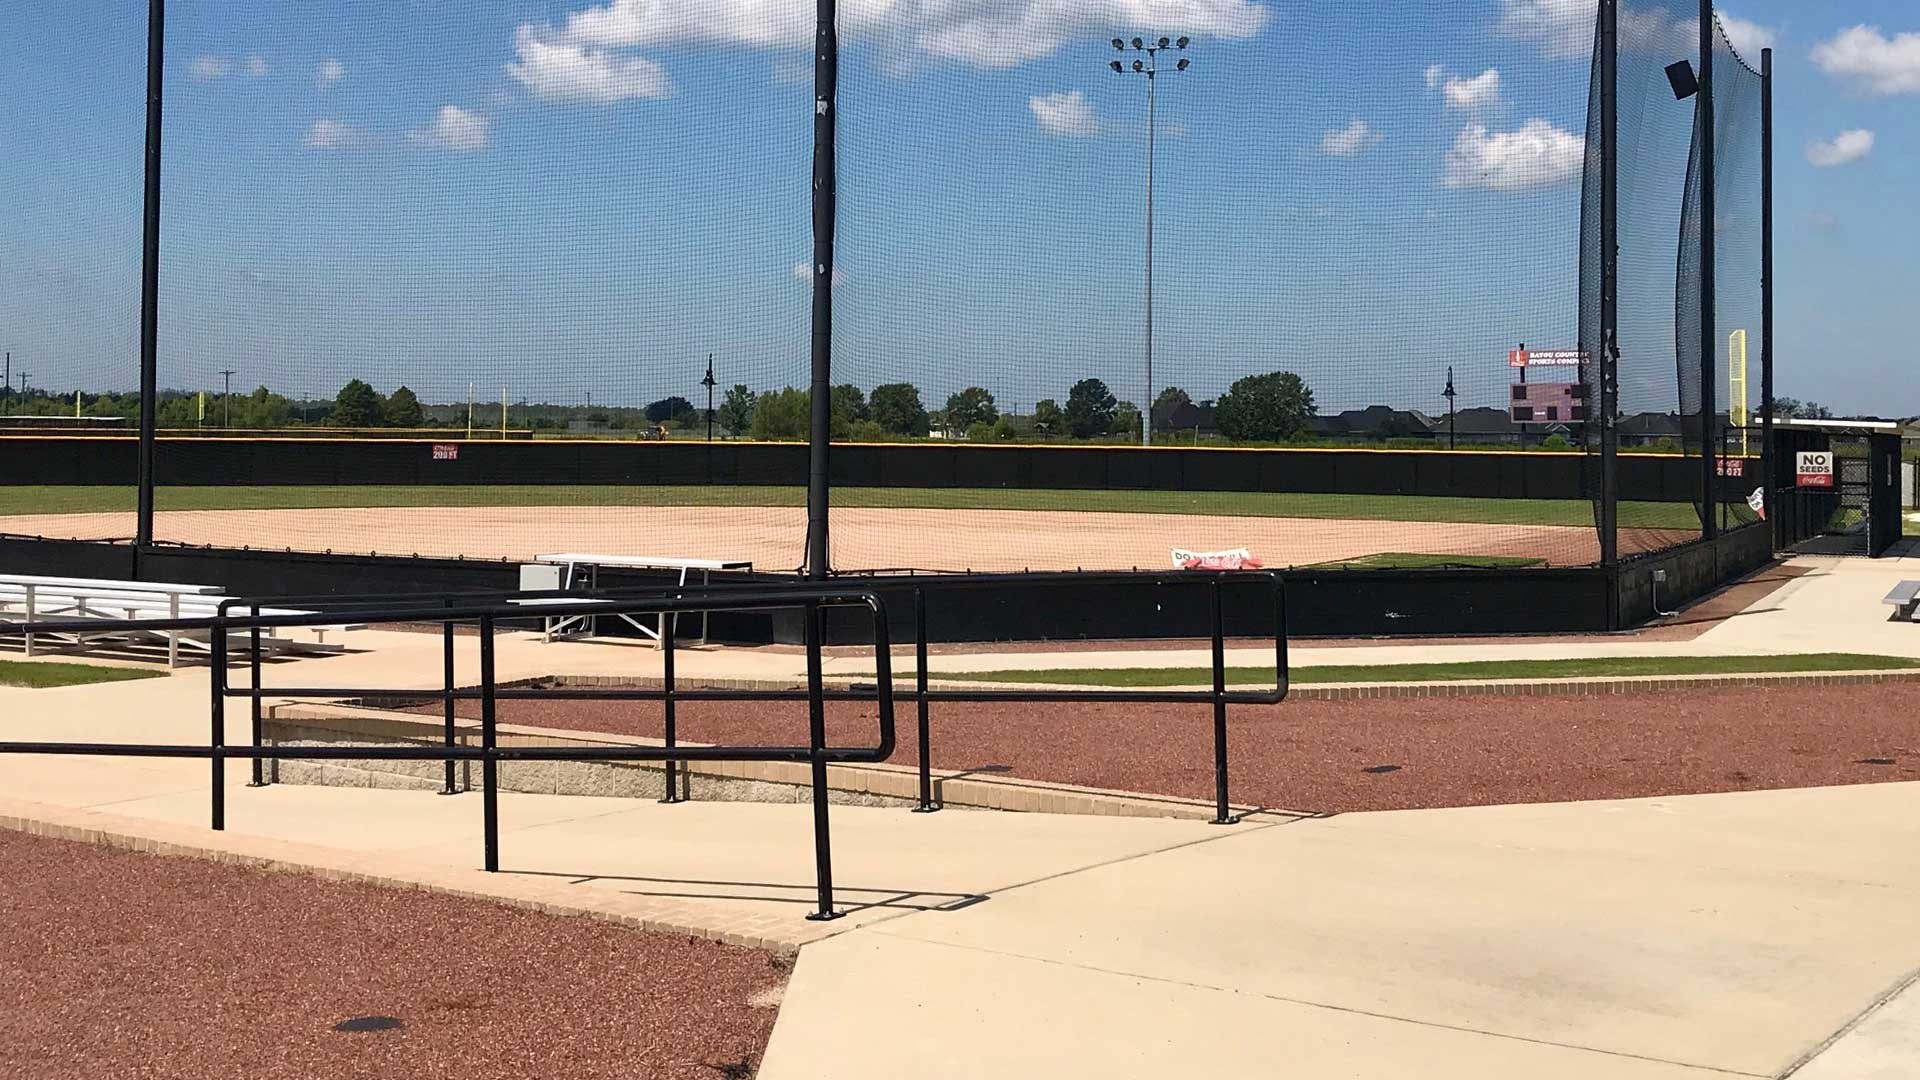 Photo of spectator area and softball field.